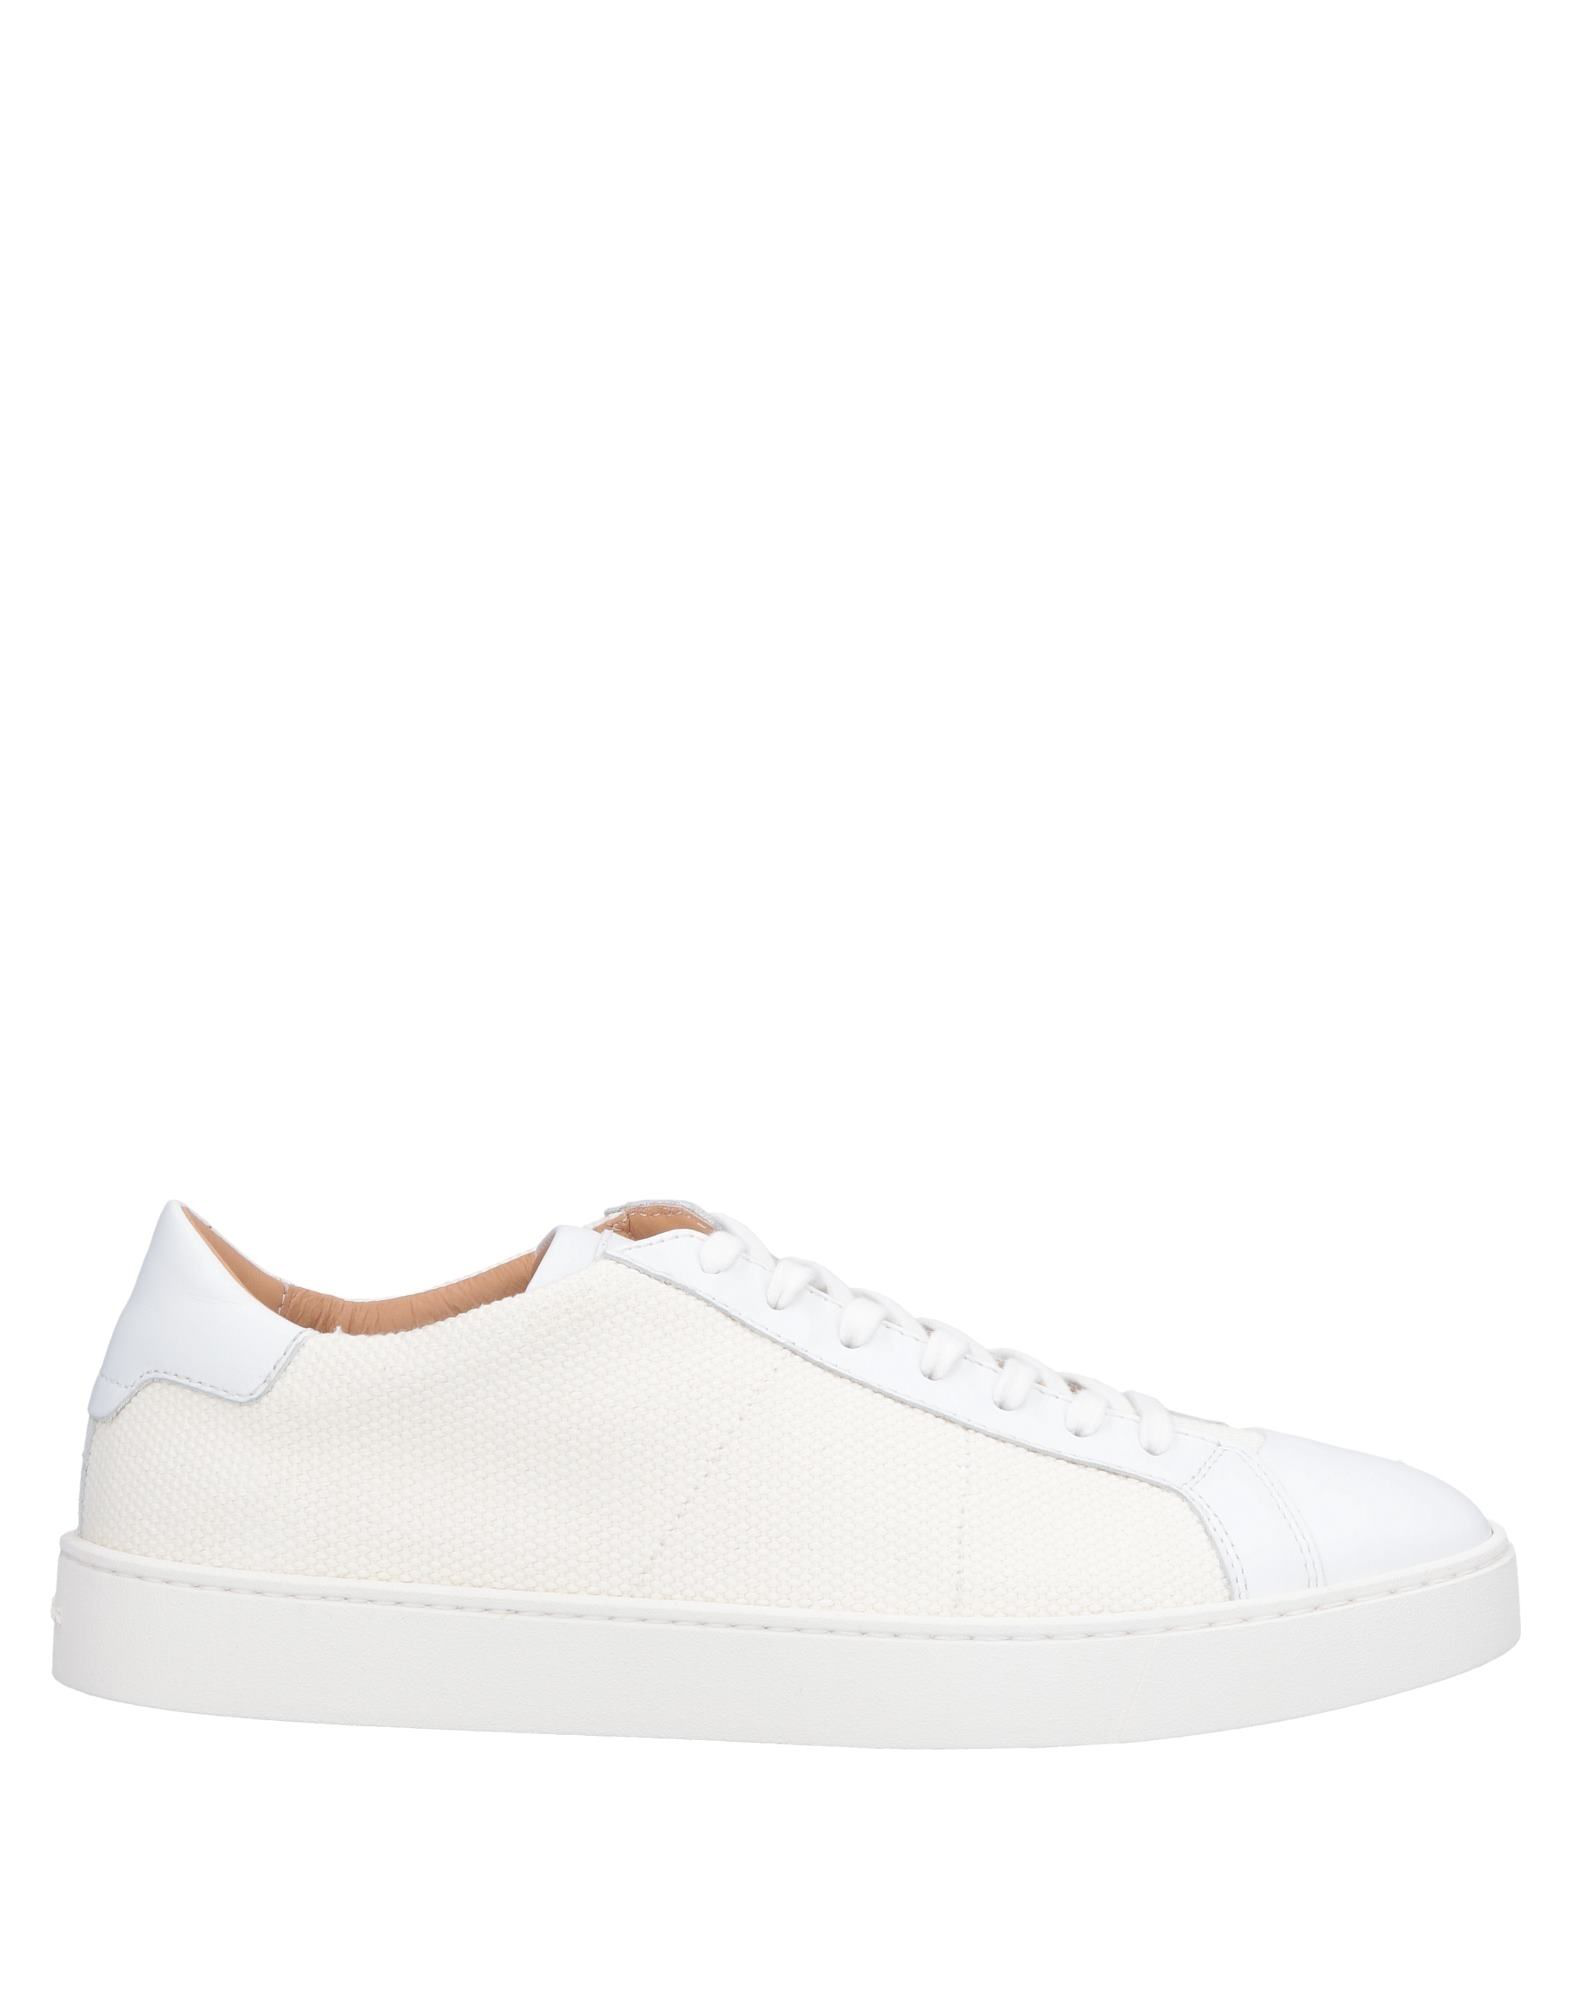 Santoni Sneakers In White | ModeSens